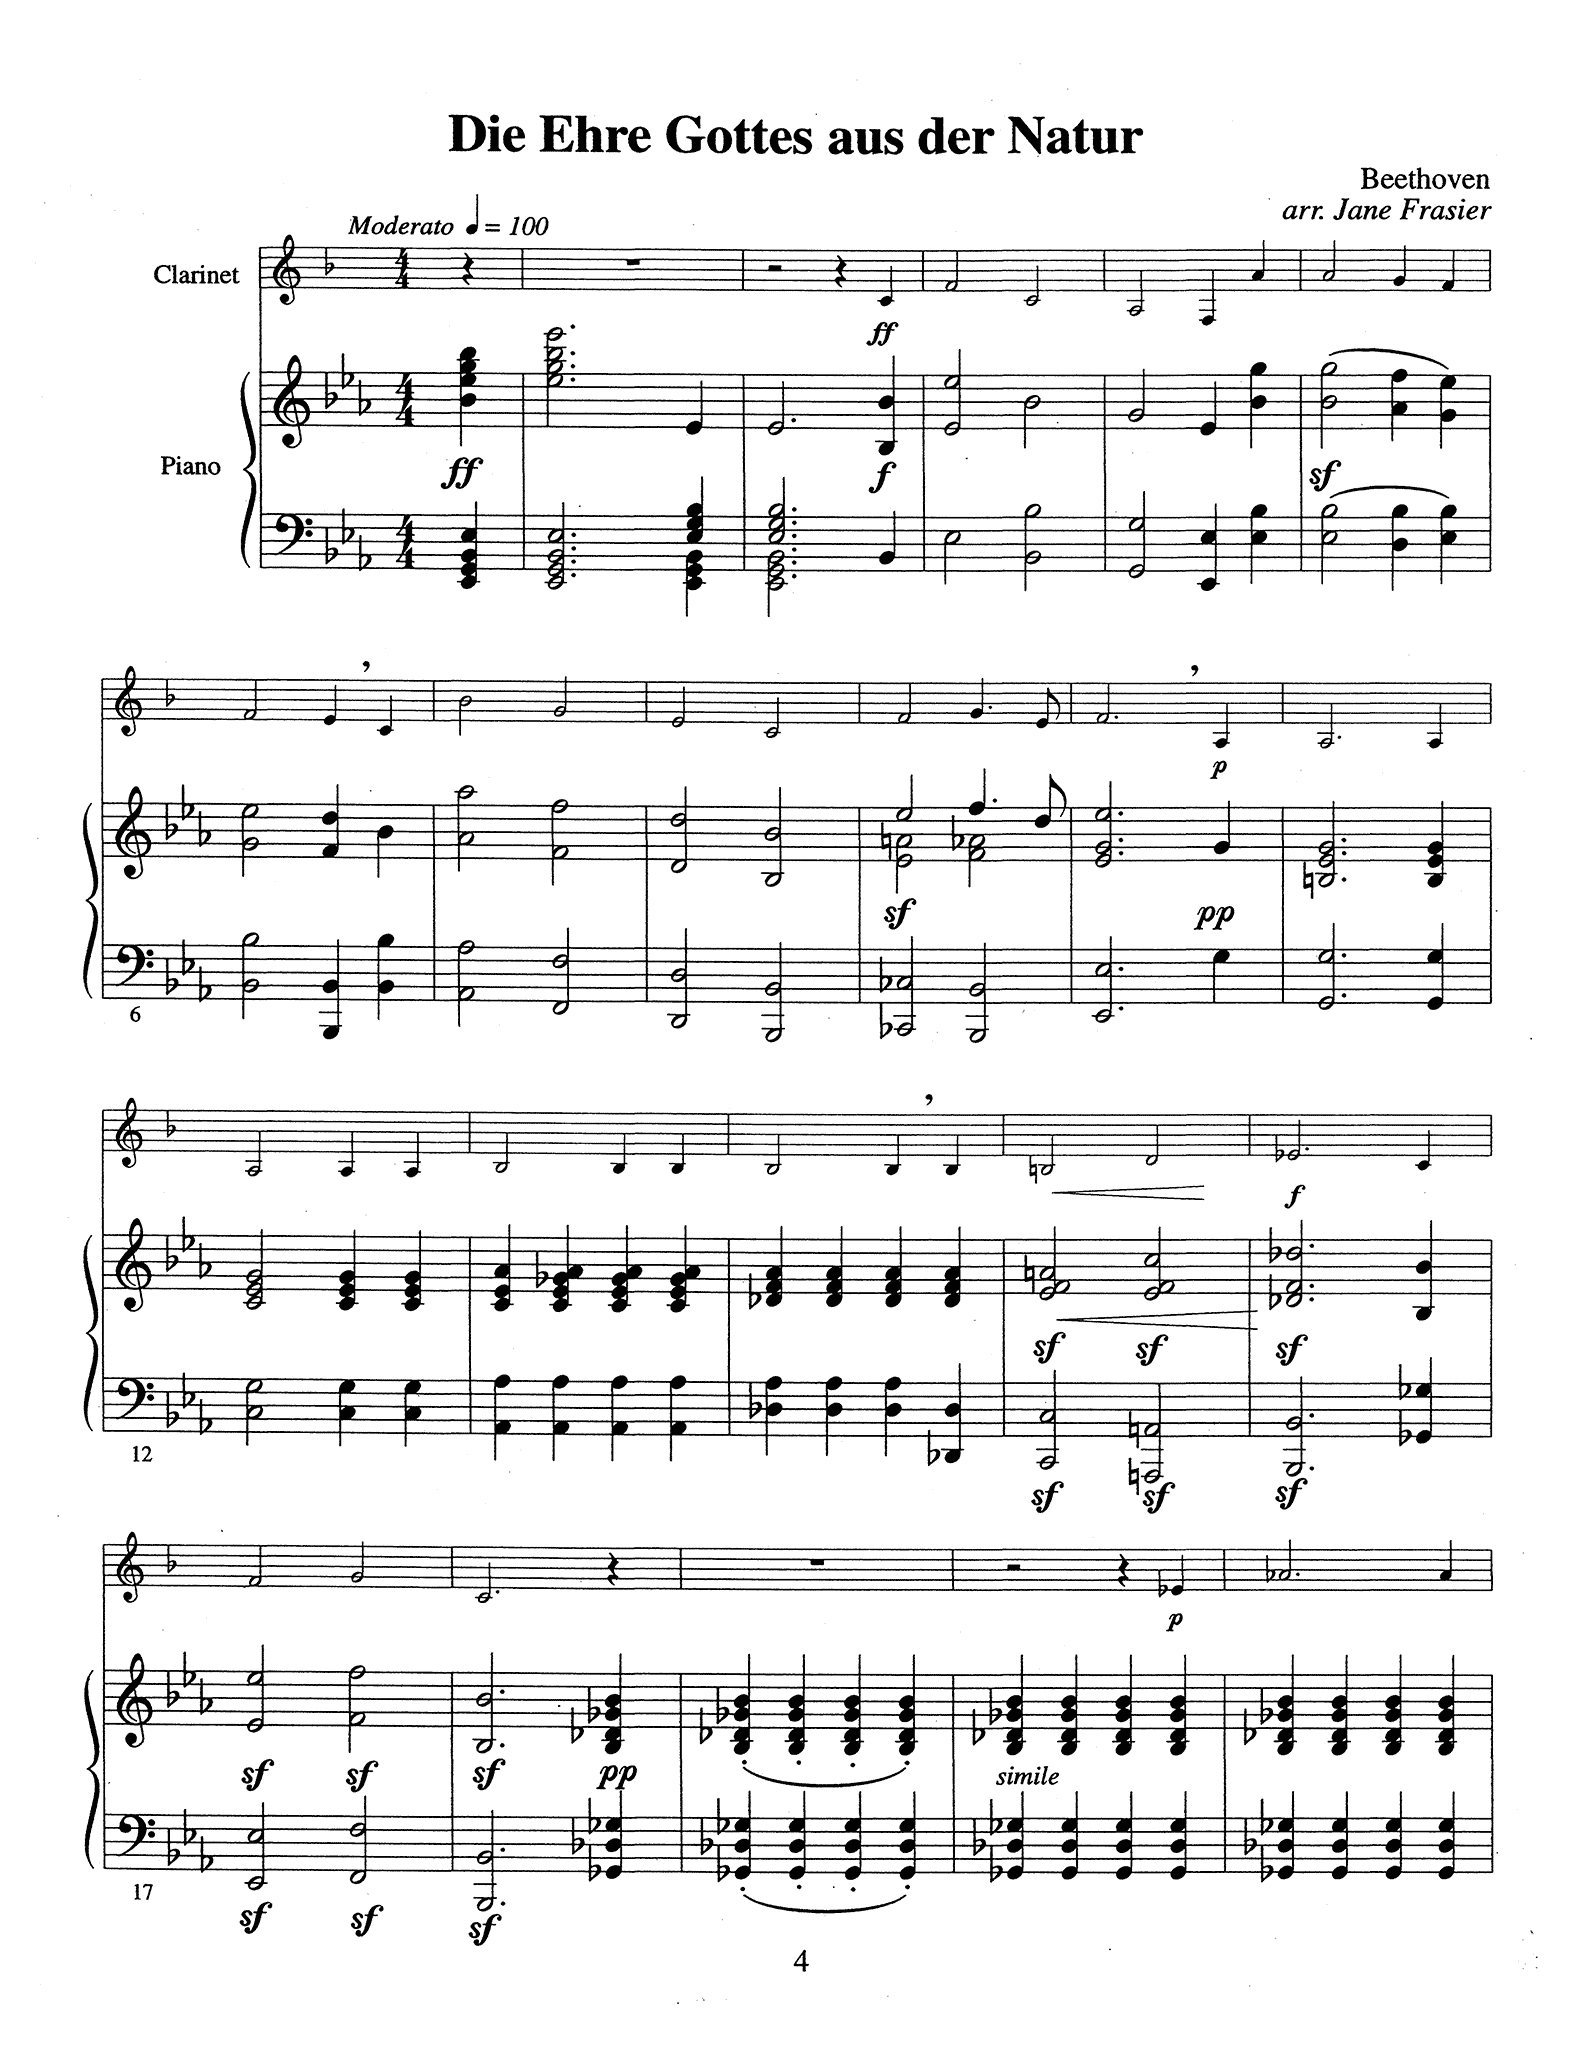 Frasier German Recital Collection: Beethoven Score